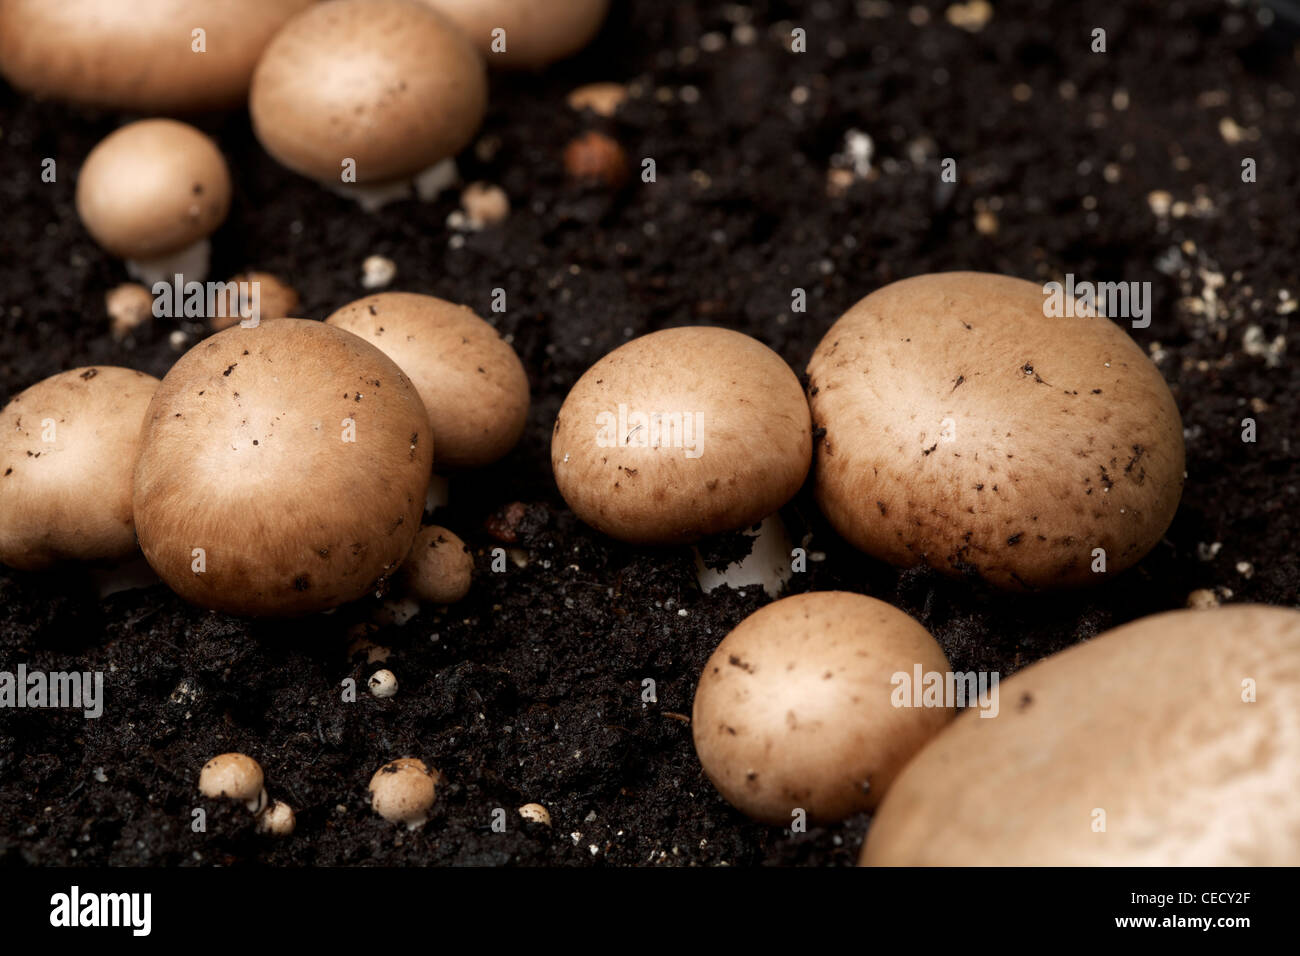 Chestnut Mushroom Growing on Compost Growth Medium Stock Photo